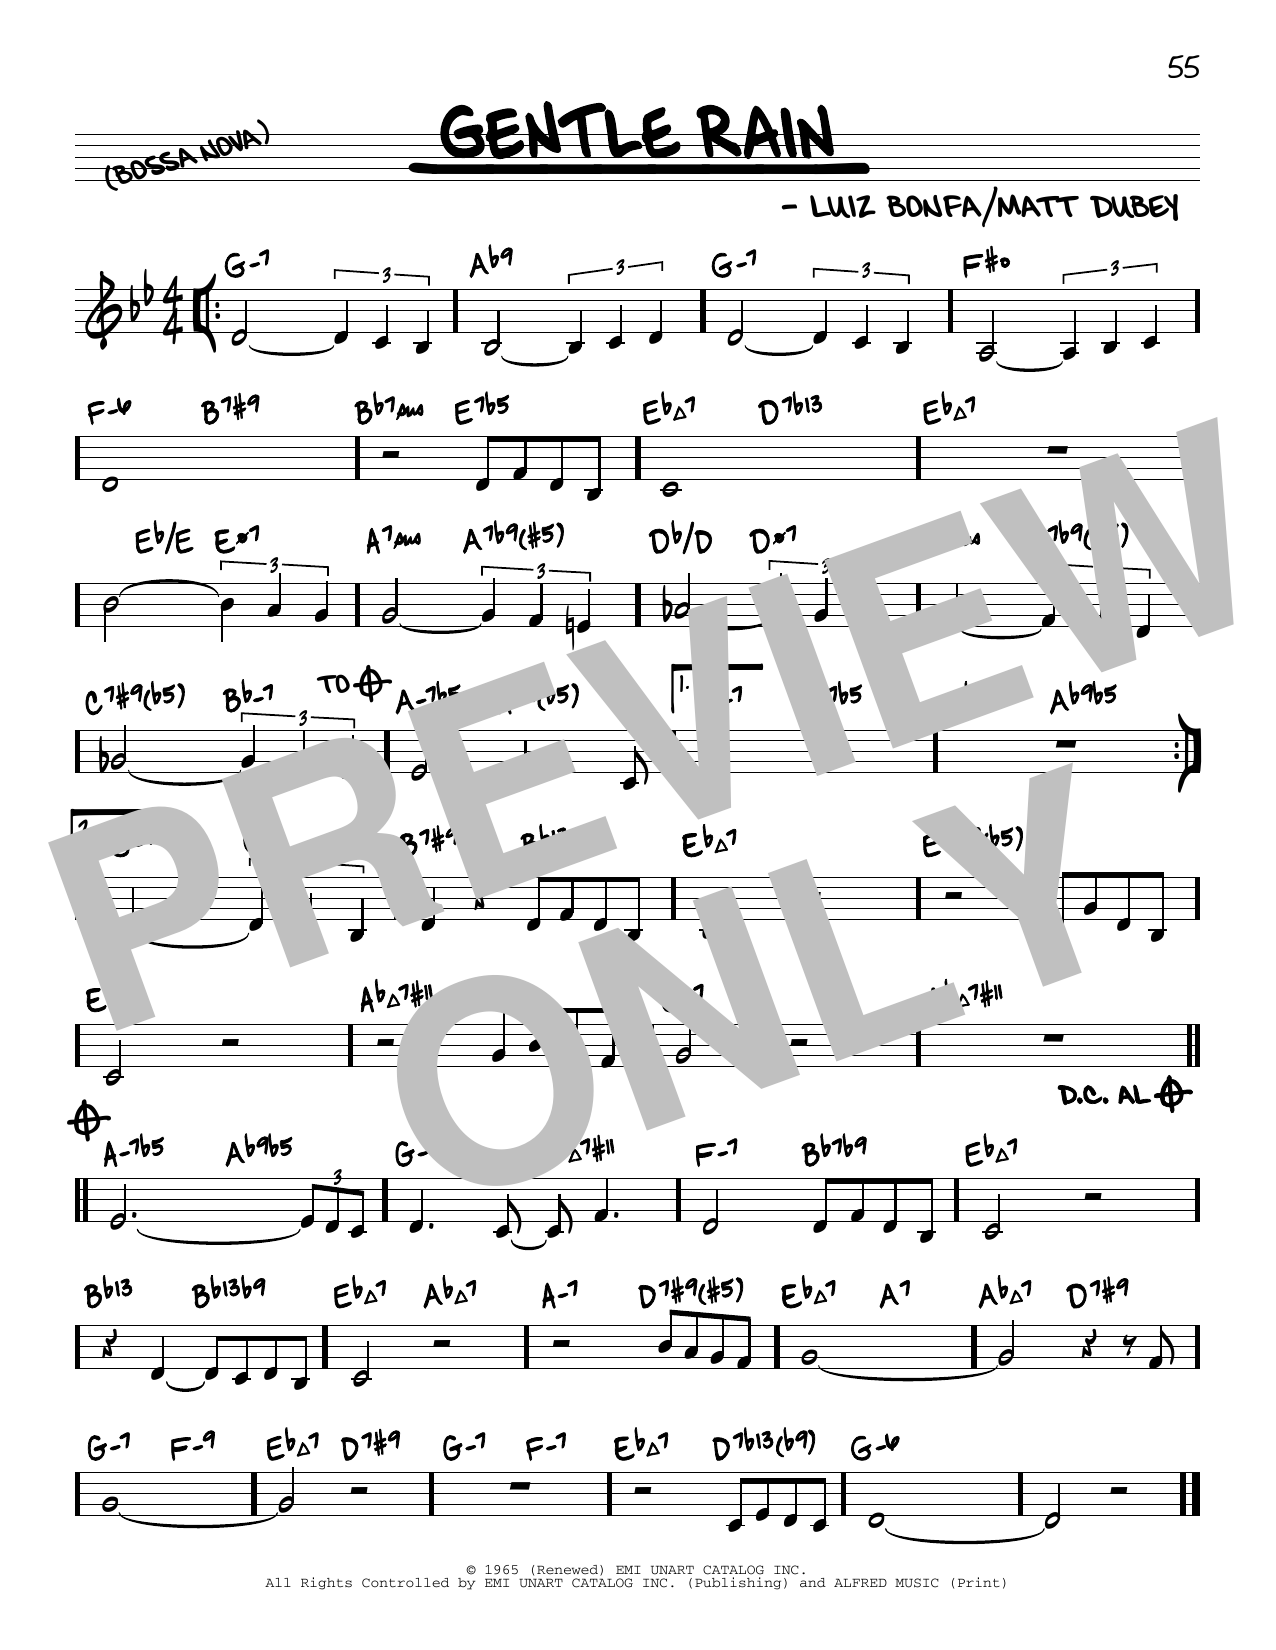 Luiz Bonfa Gentle Rain (arr. David Hazeltine) Sheet Music Notes & Chords for Real Book – Enhanced Chords - Download or Print PDF